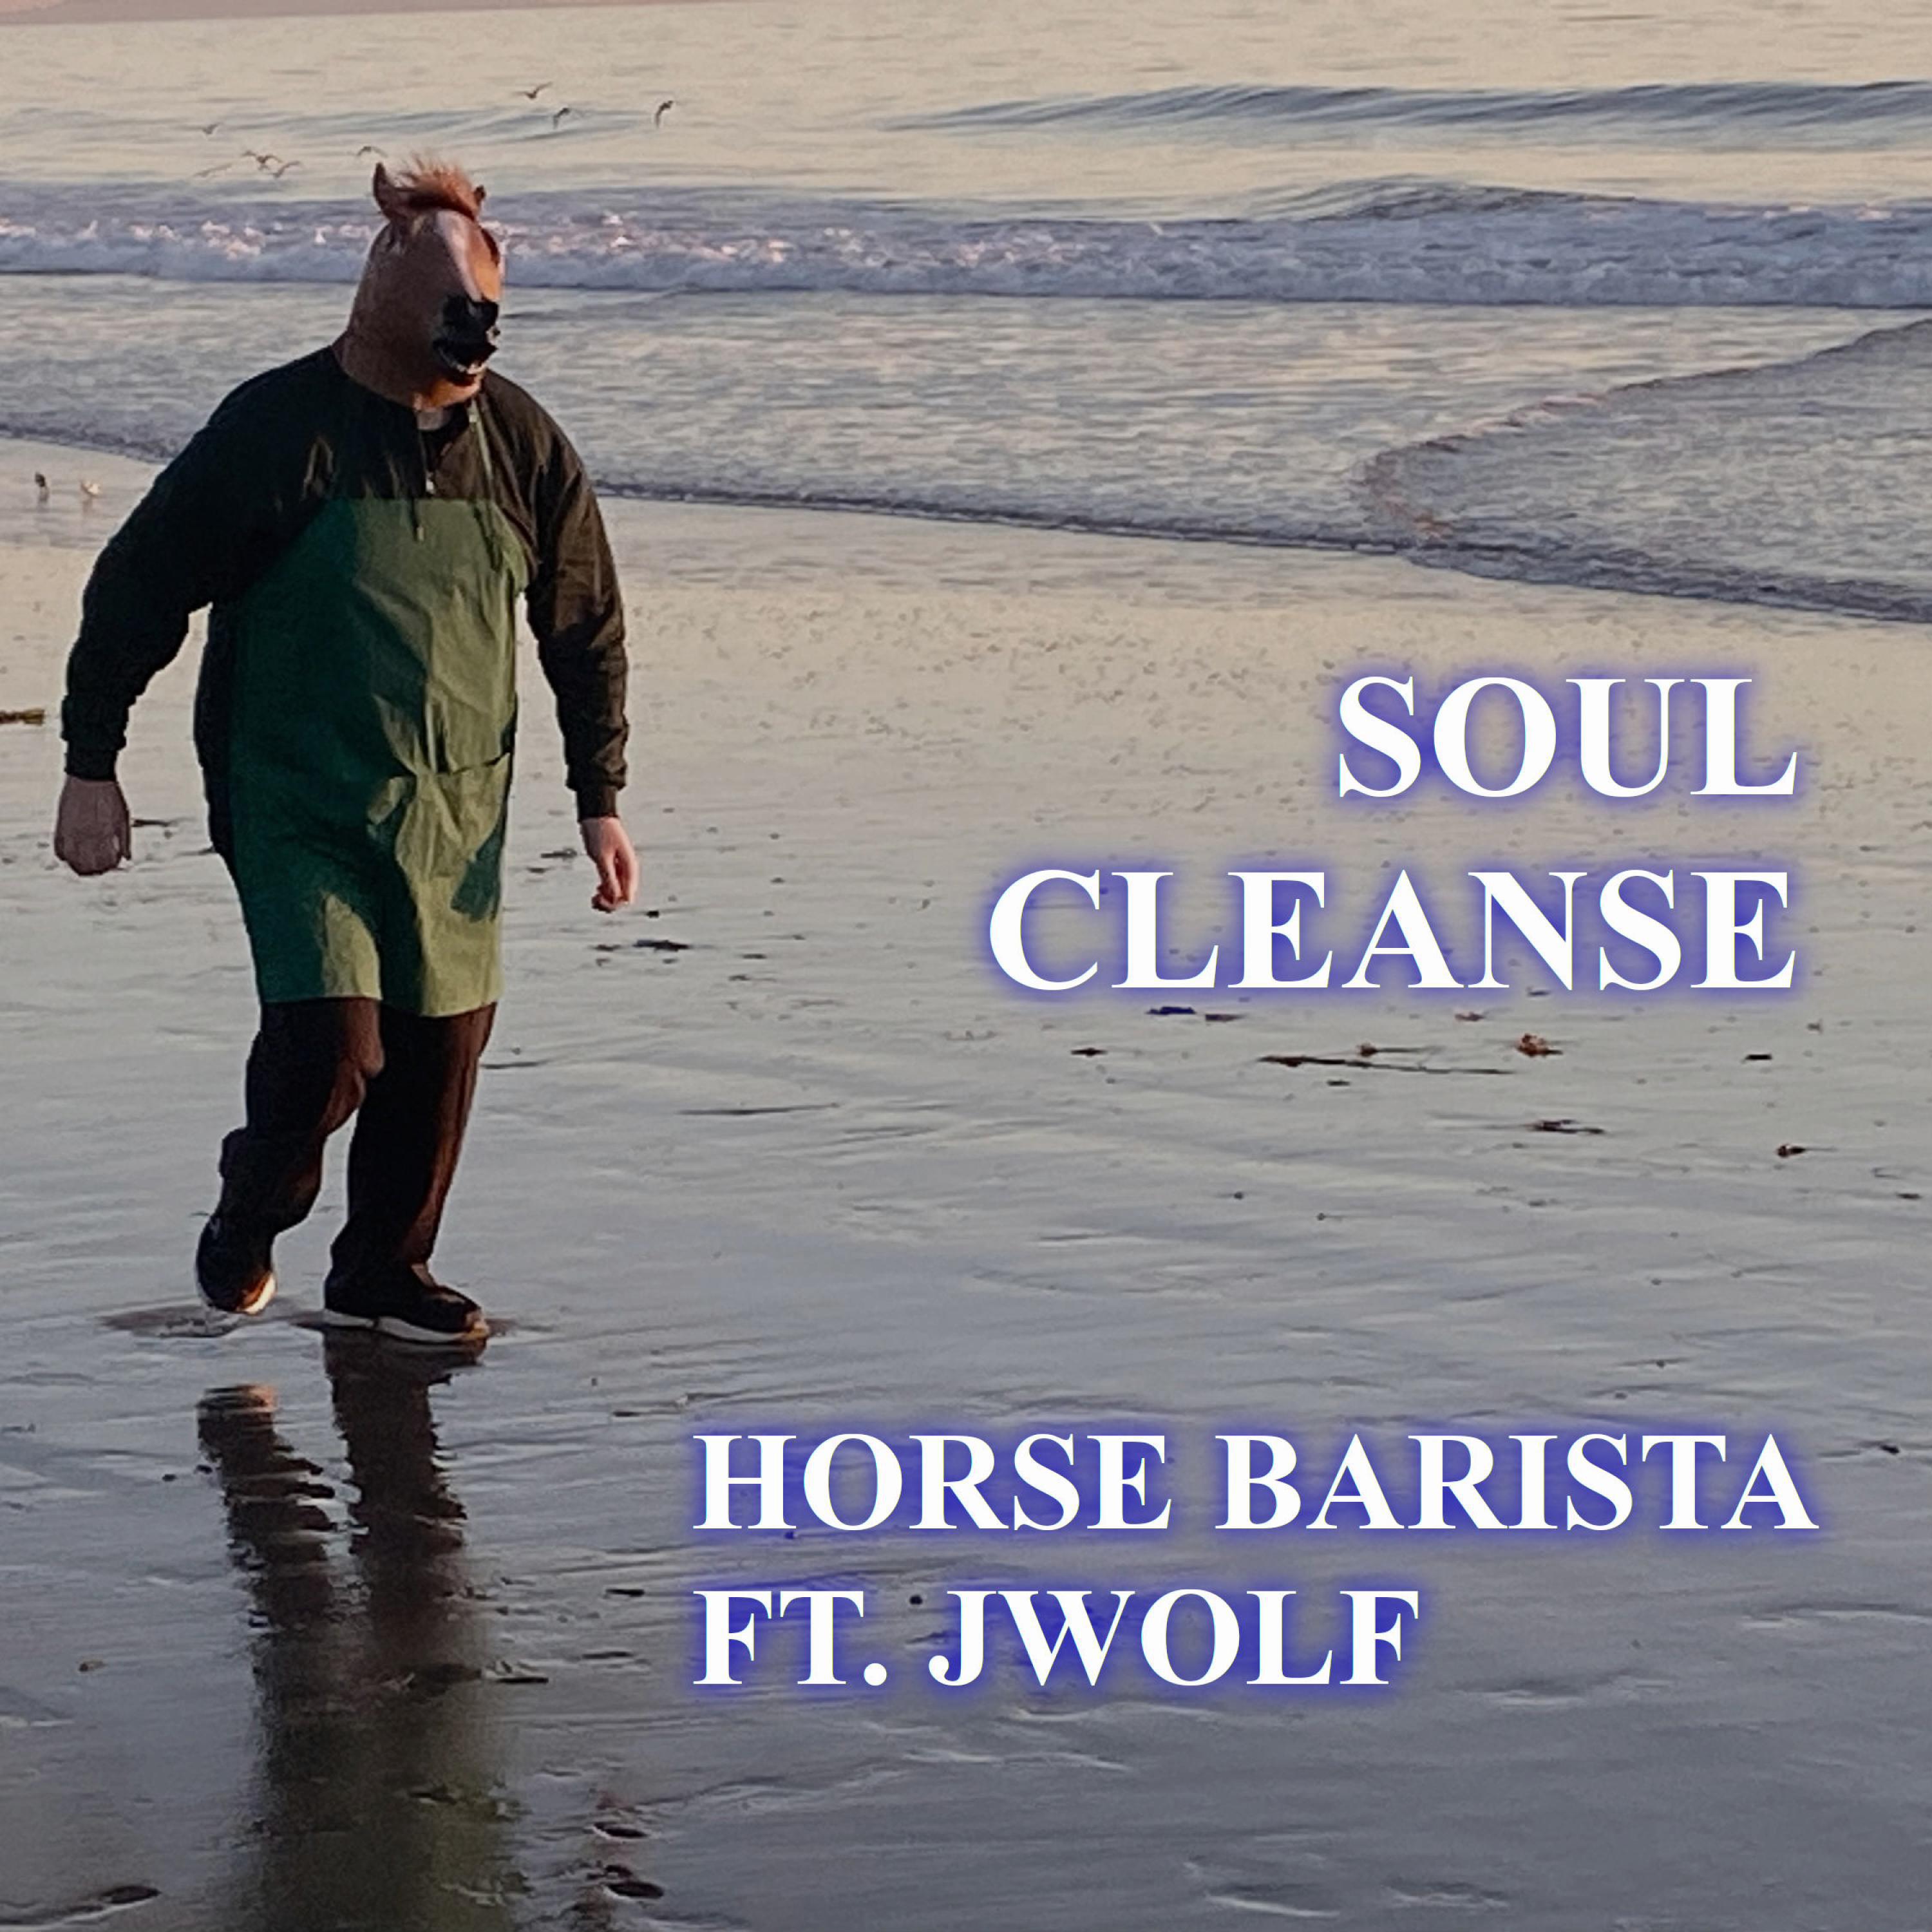 Horse Barista - SOUL CLEANSE (feat. JWOLF)